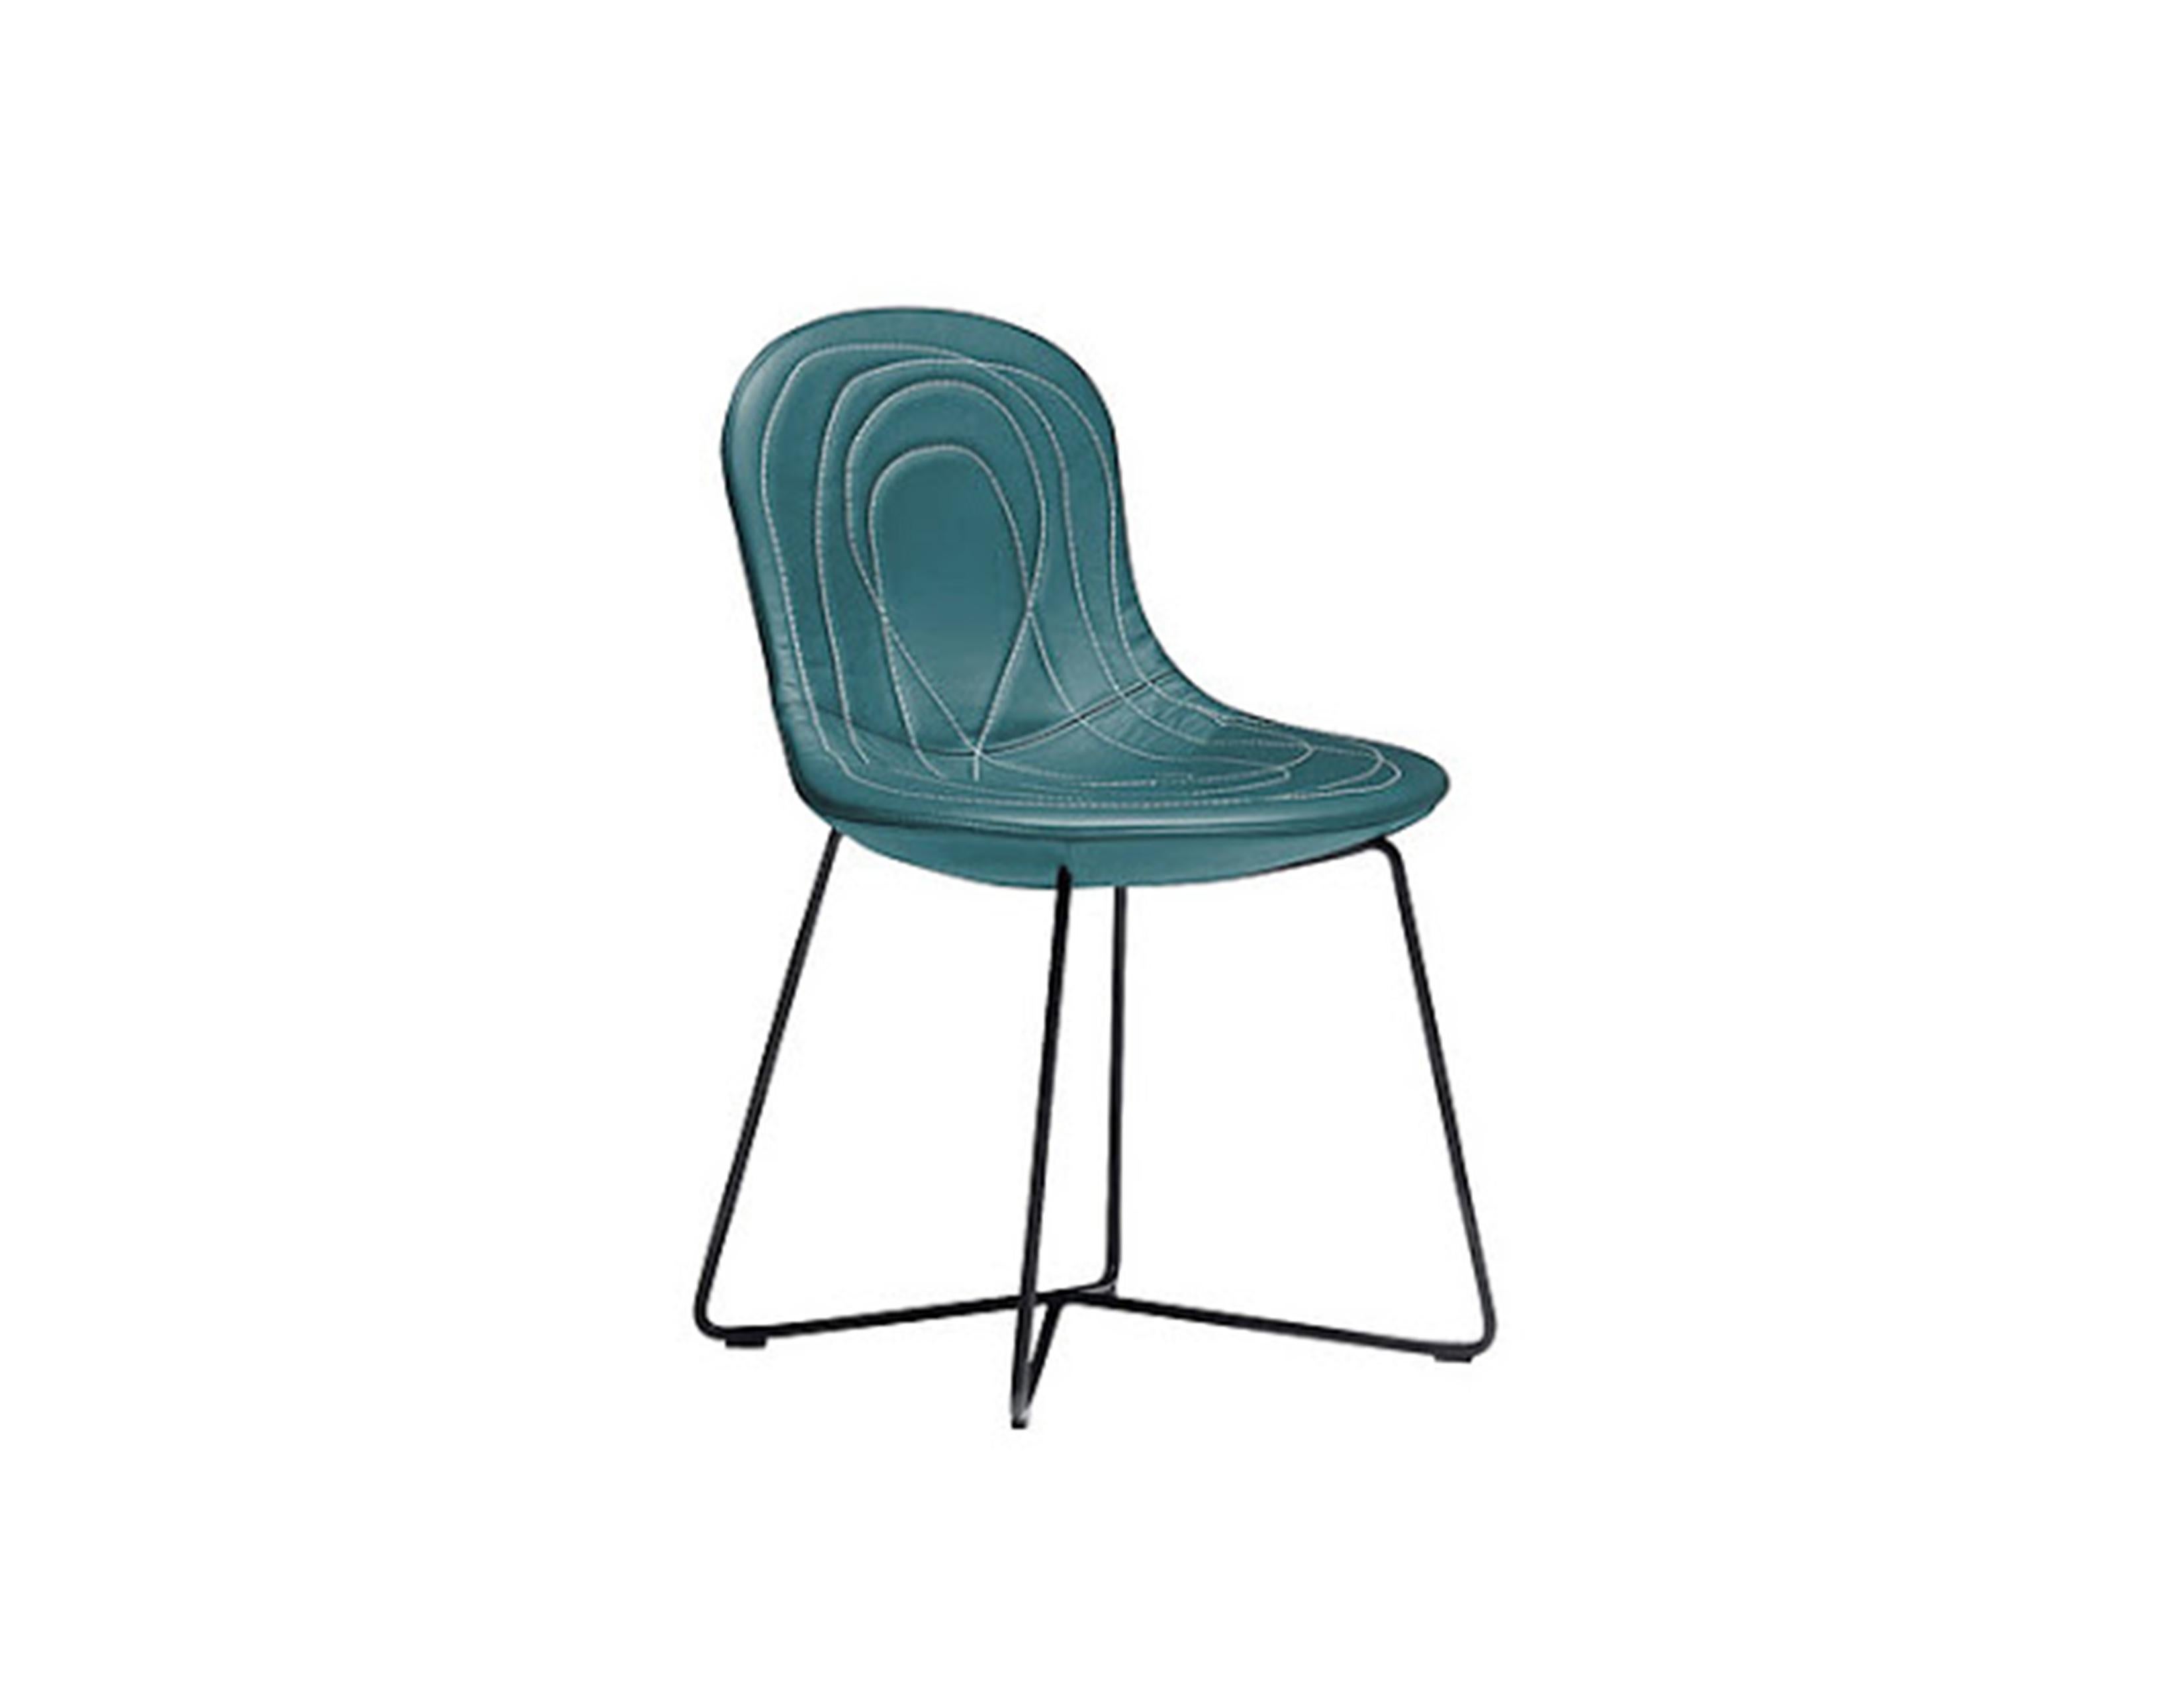 Customizable New Tacchini Doodle Chair Designed by Claesson Koivisto Rune 2